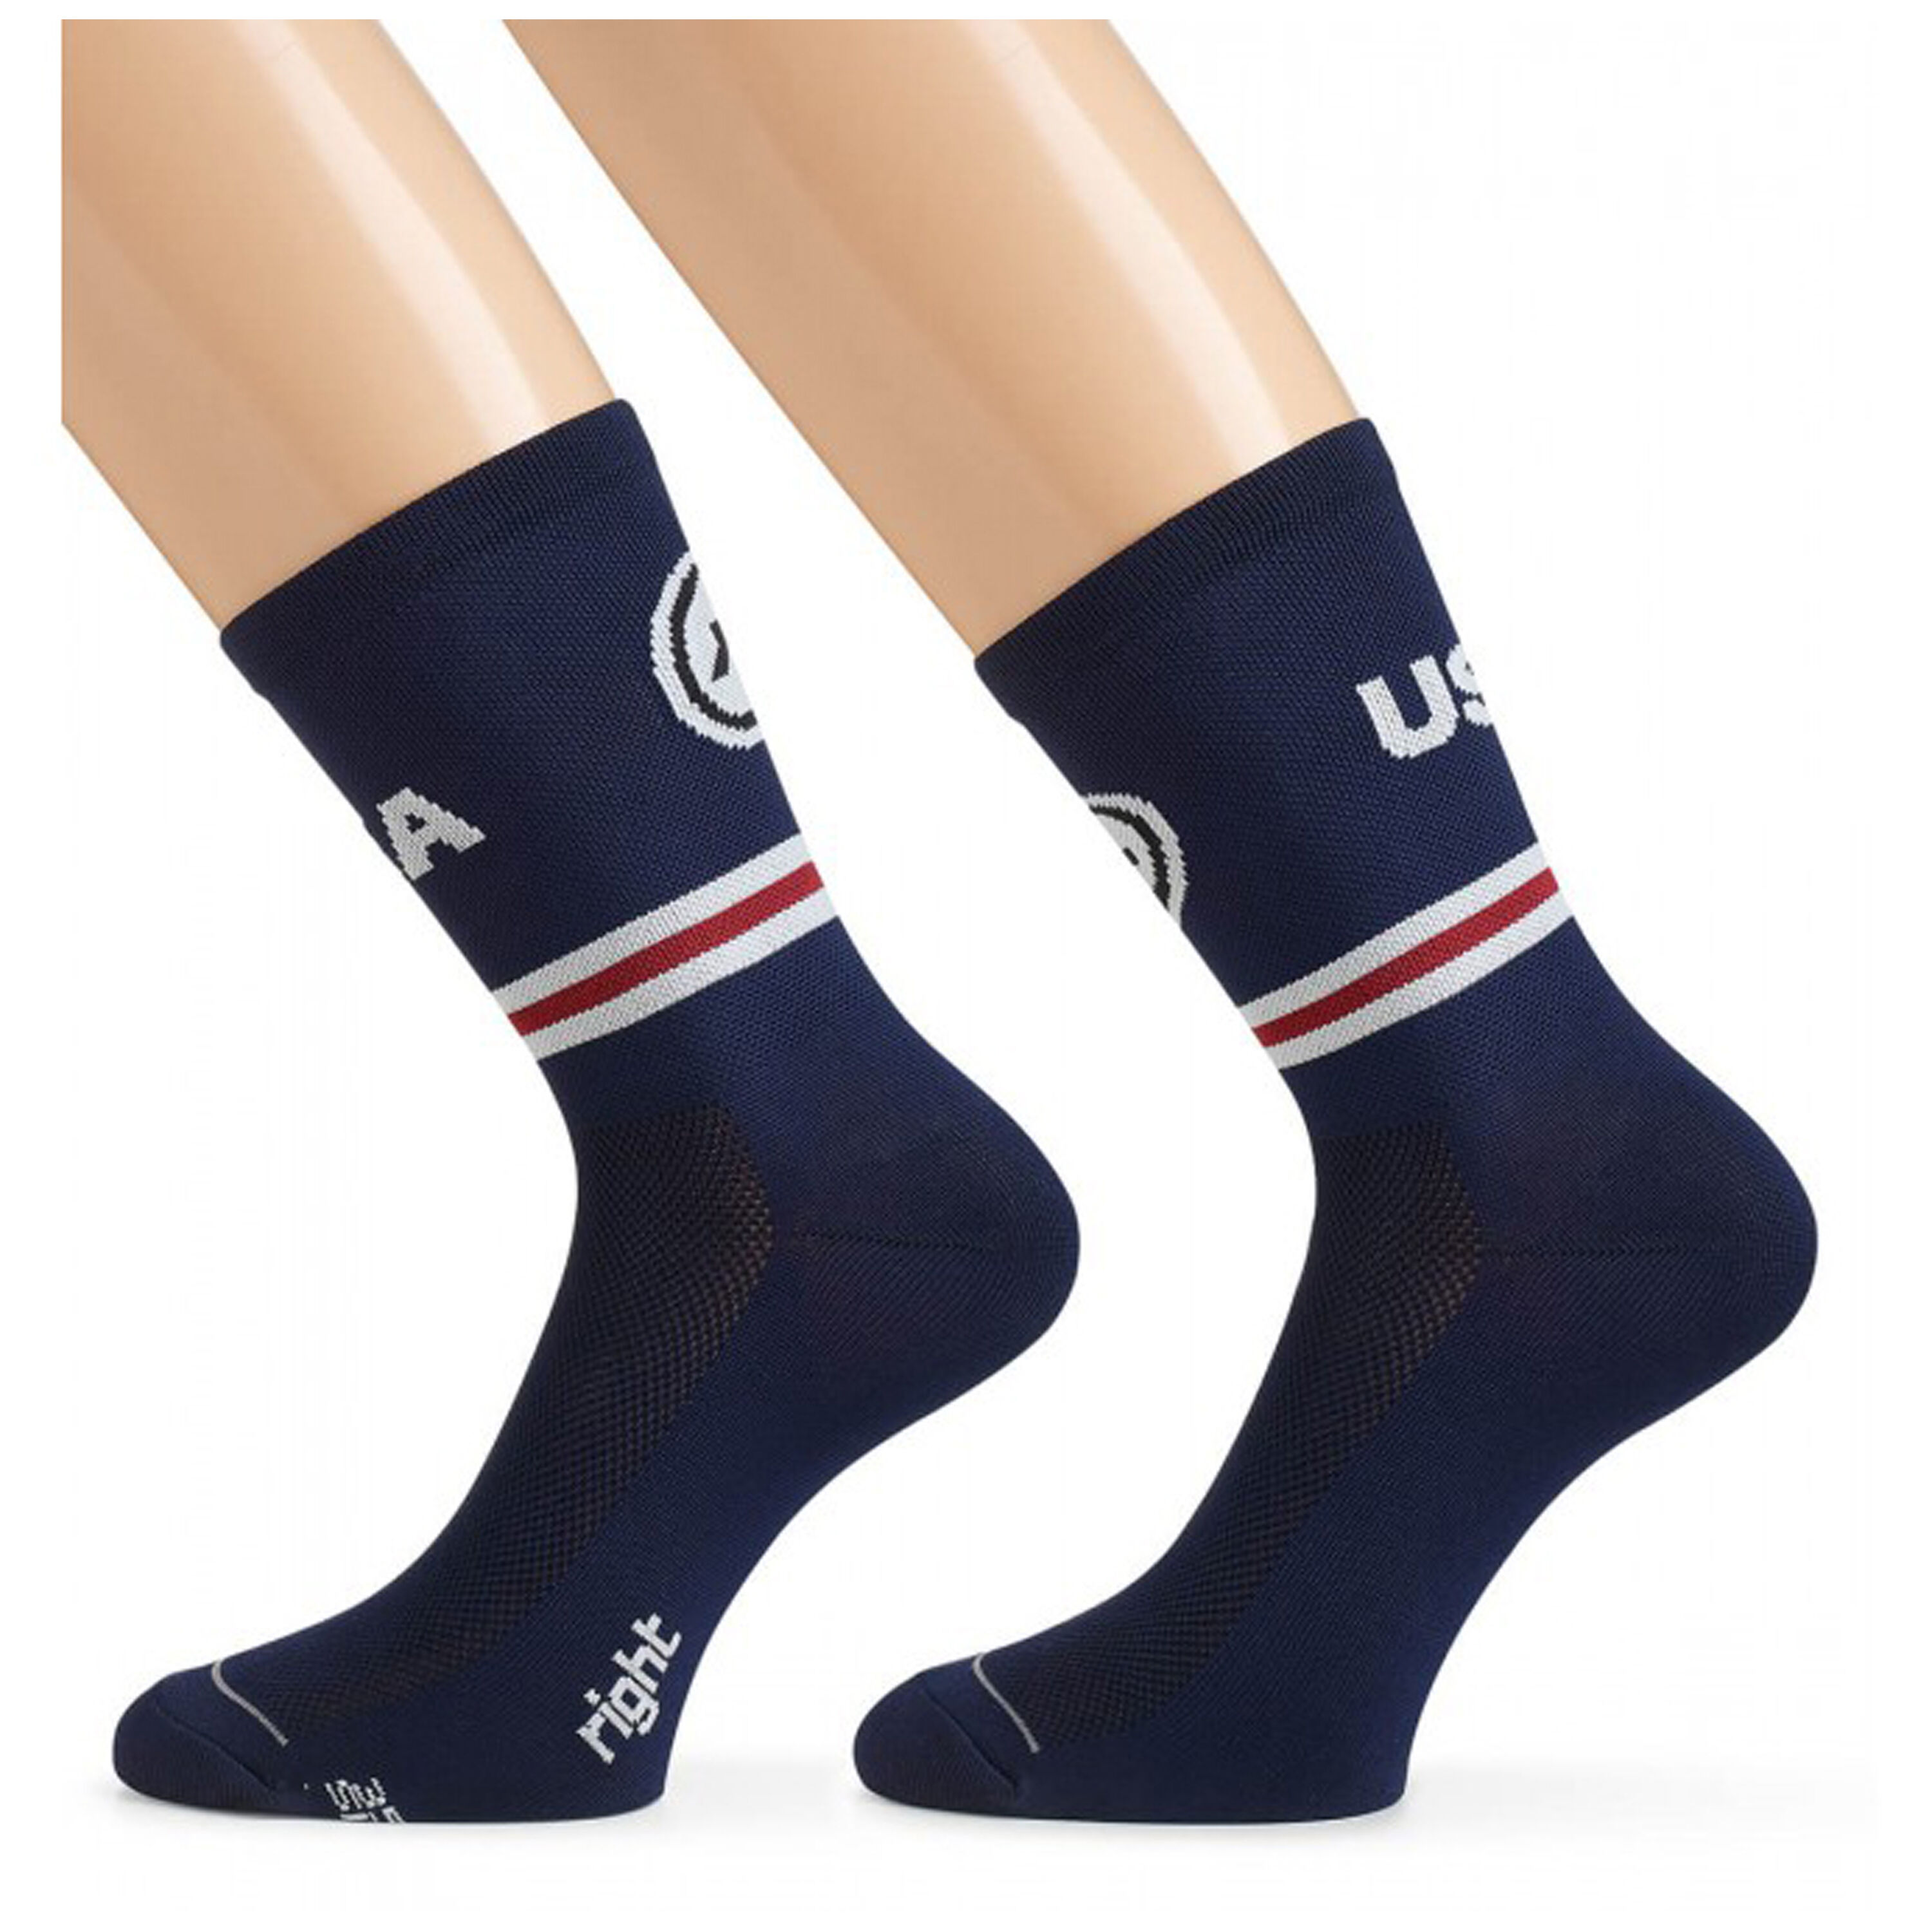 Assos Sock USA cycling socks LordGun online bike store